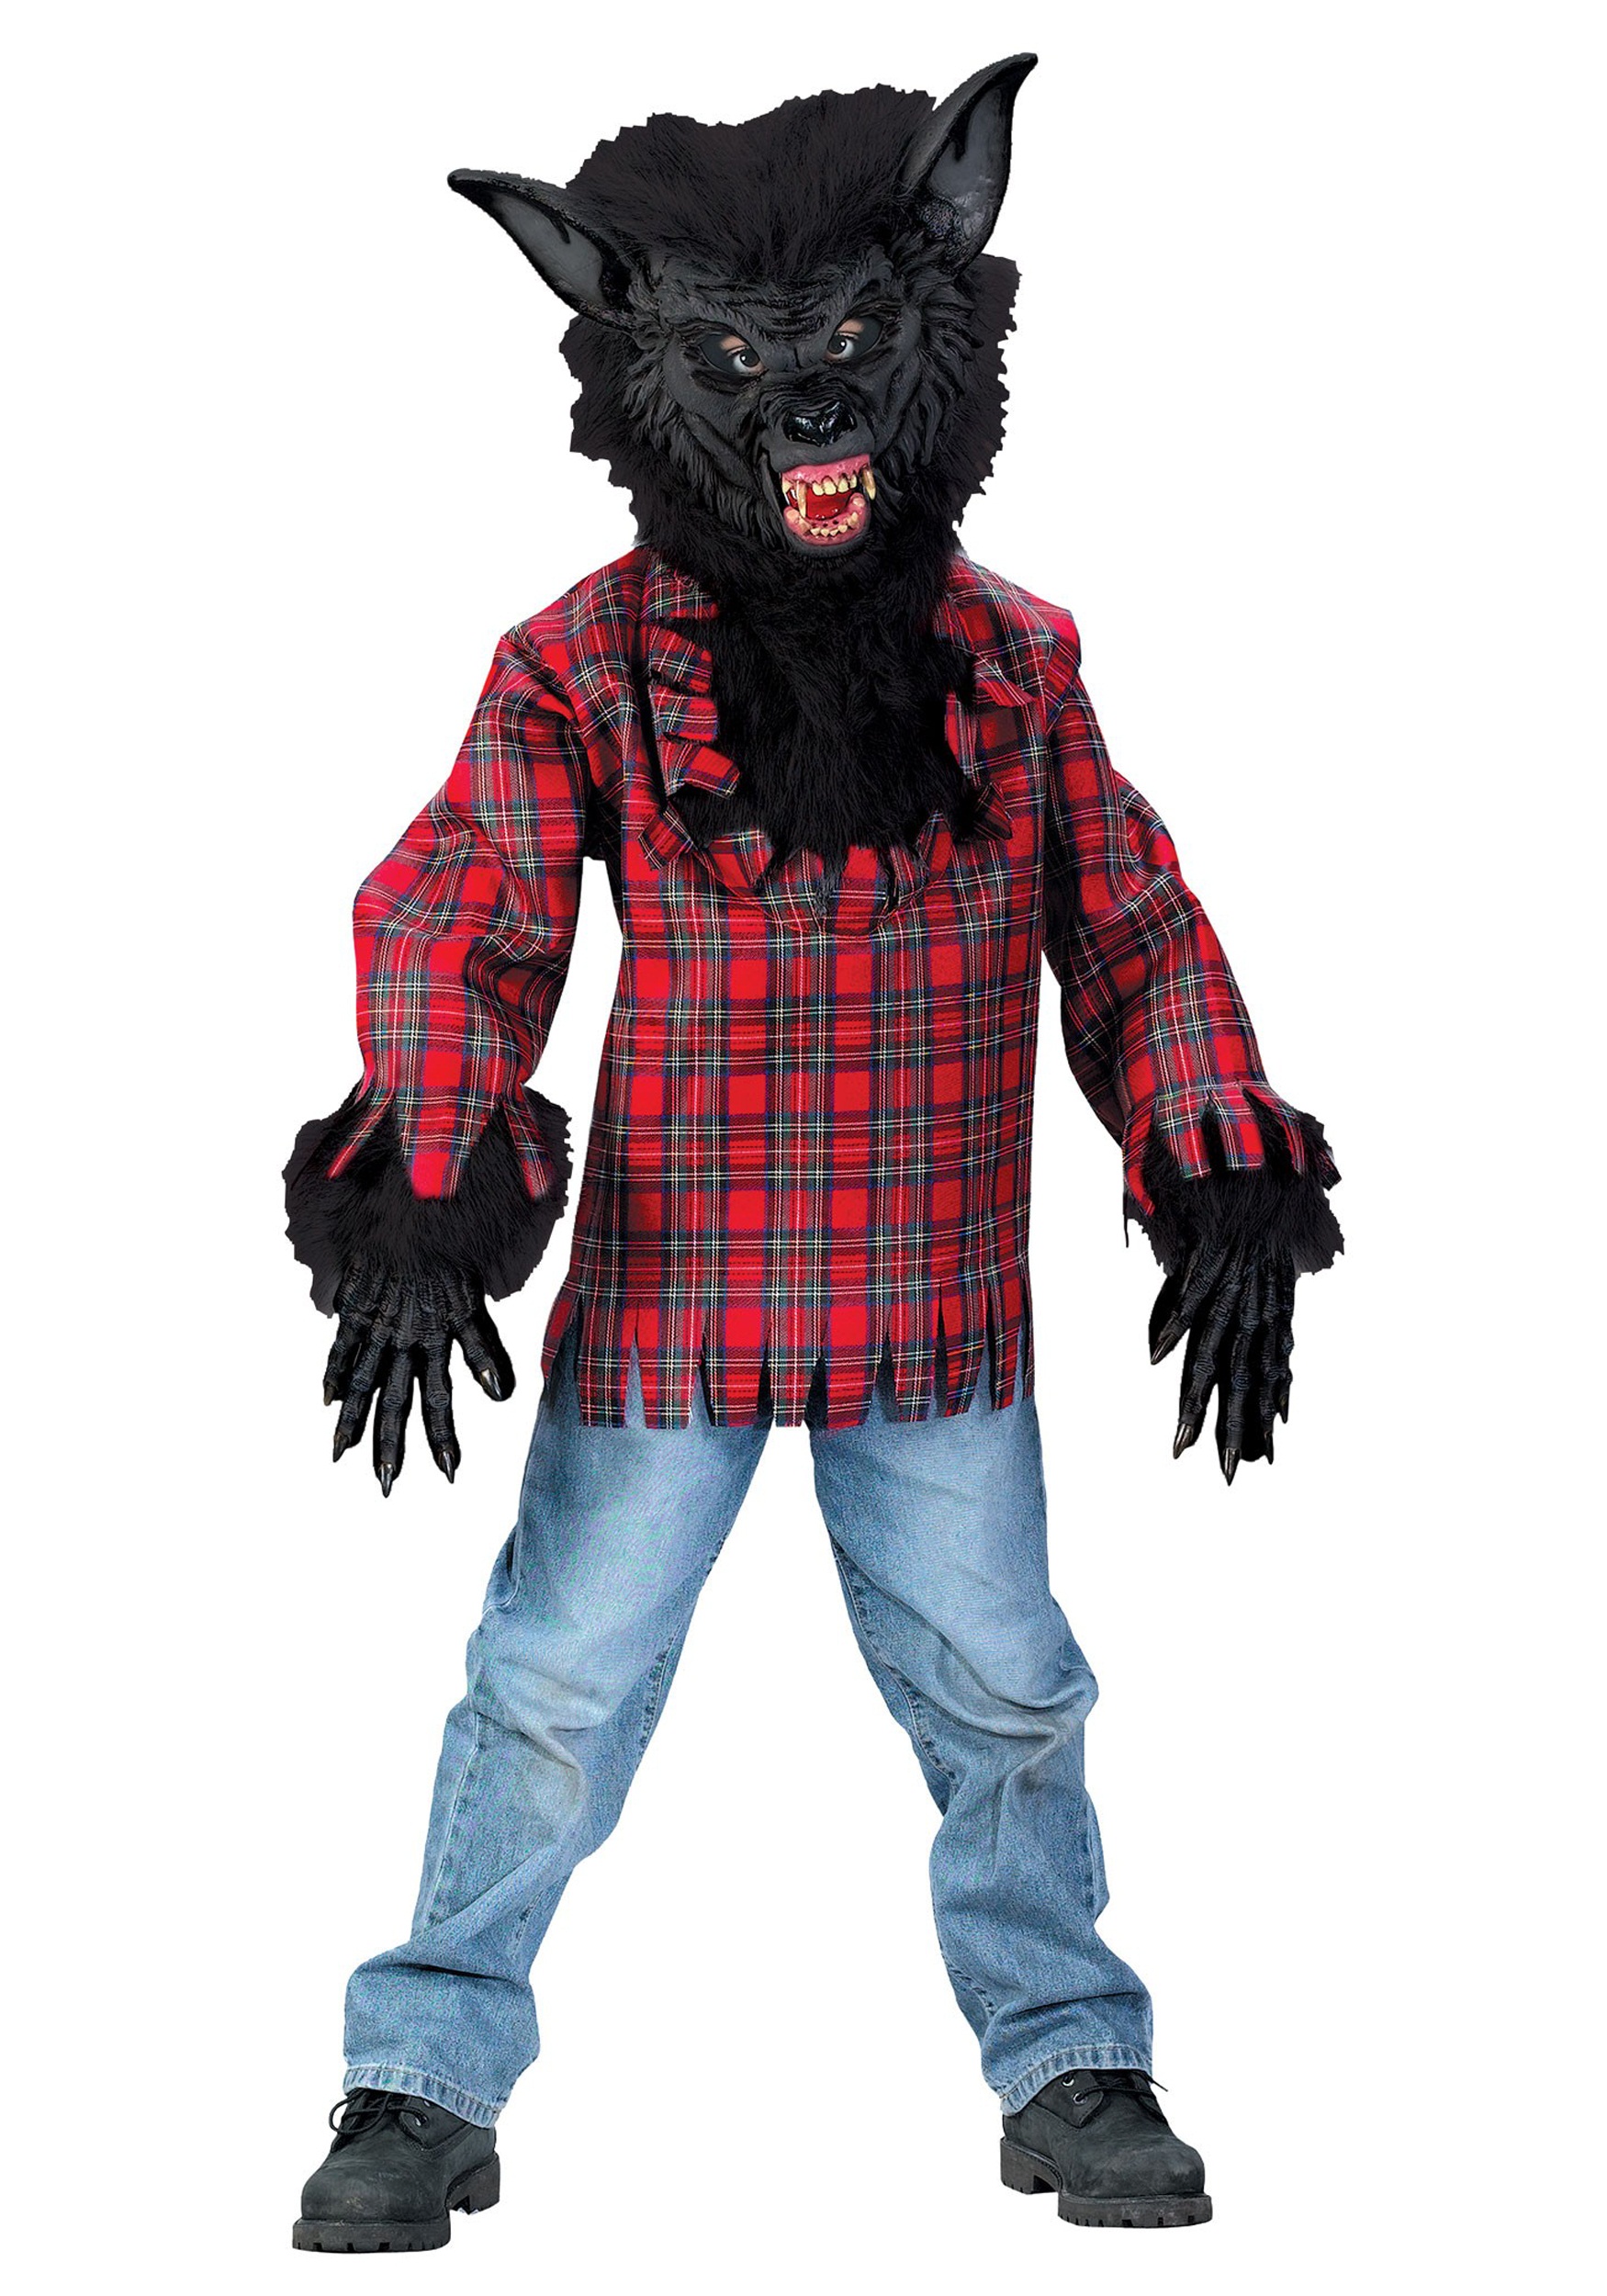 Child Black Werewolf Costume with Free Shipping in U.S., UK, Europe, Canada...